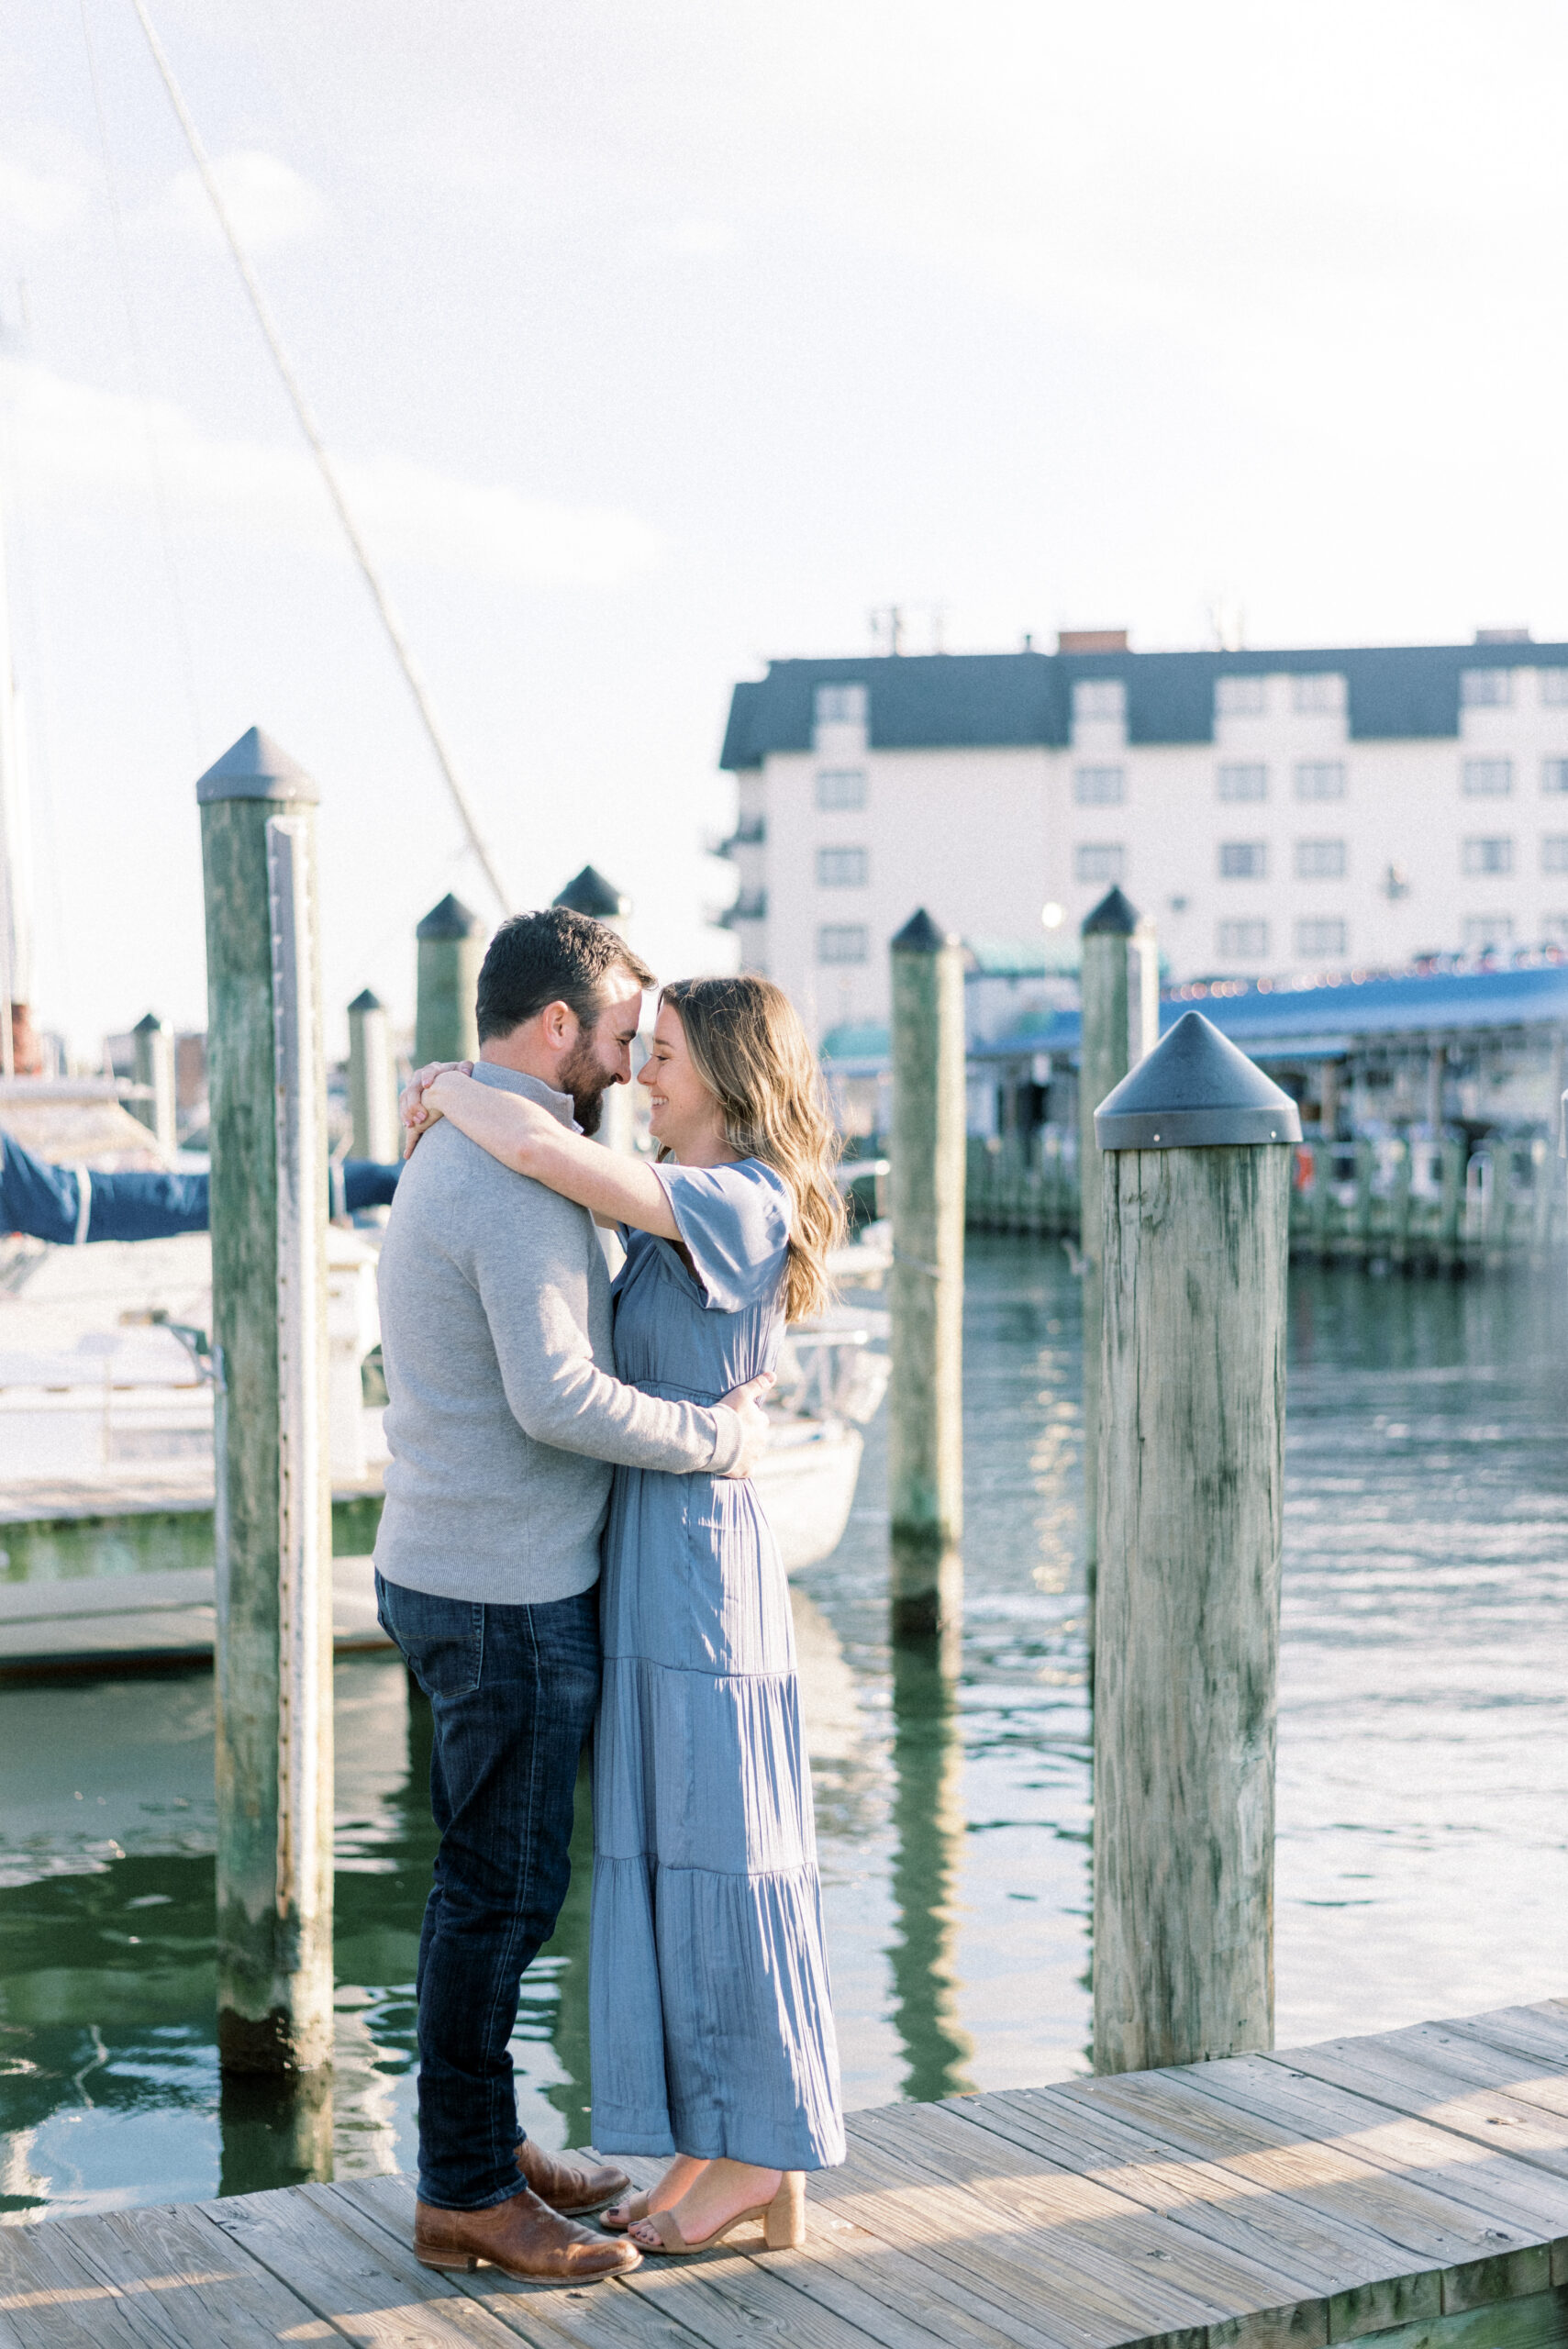 Maryland wedding photographer captures man and woman hugging on dock